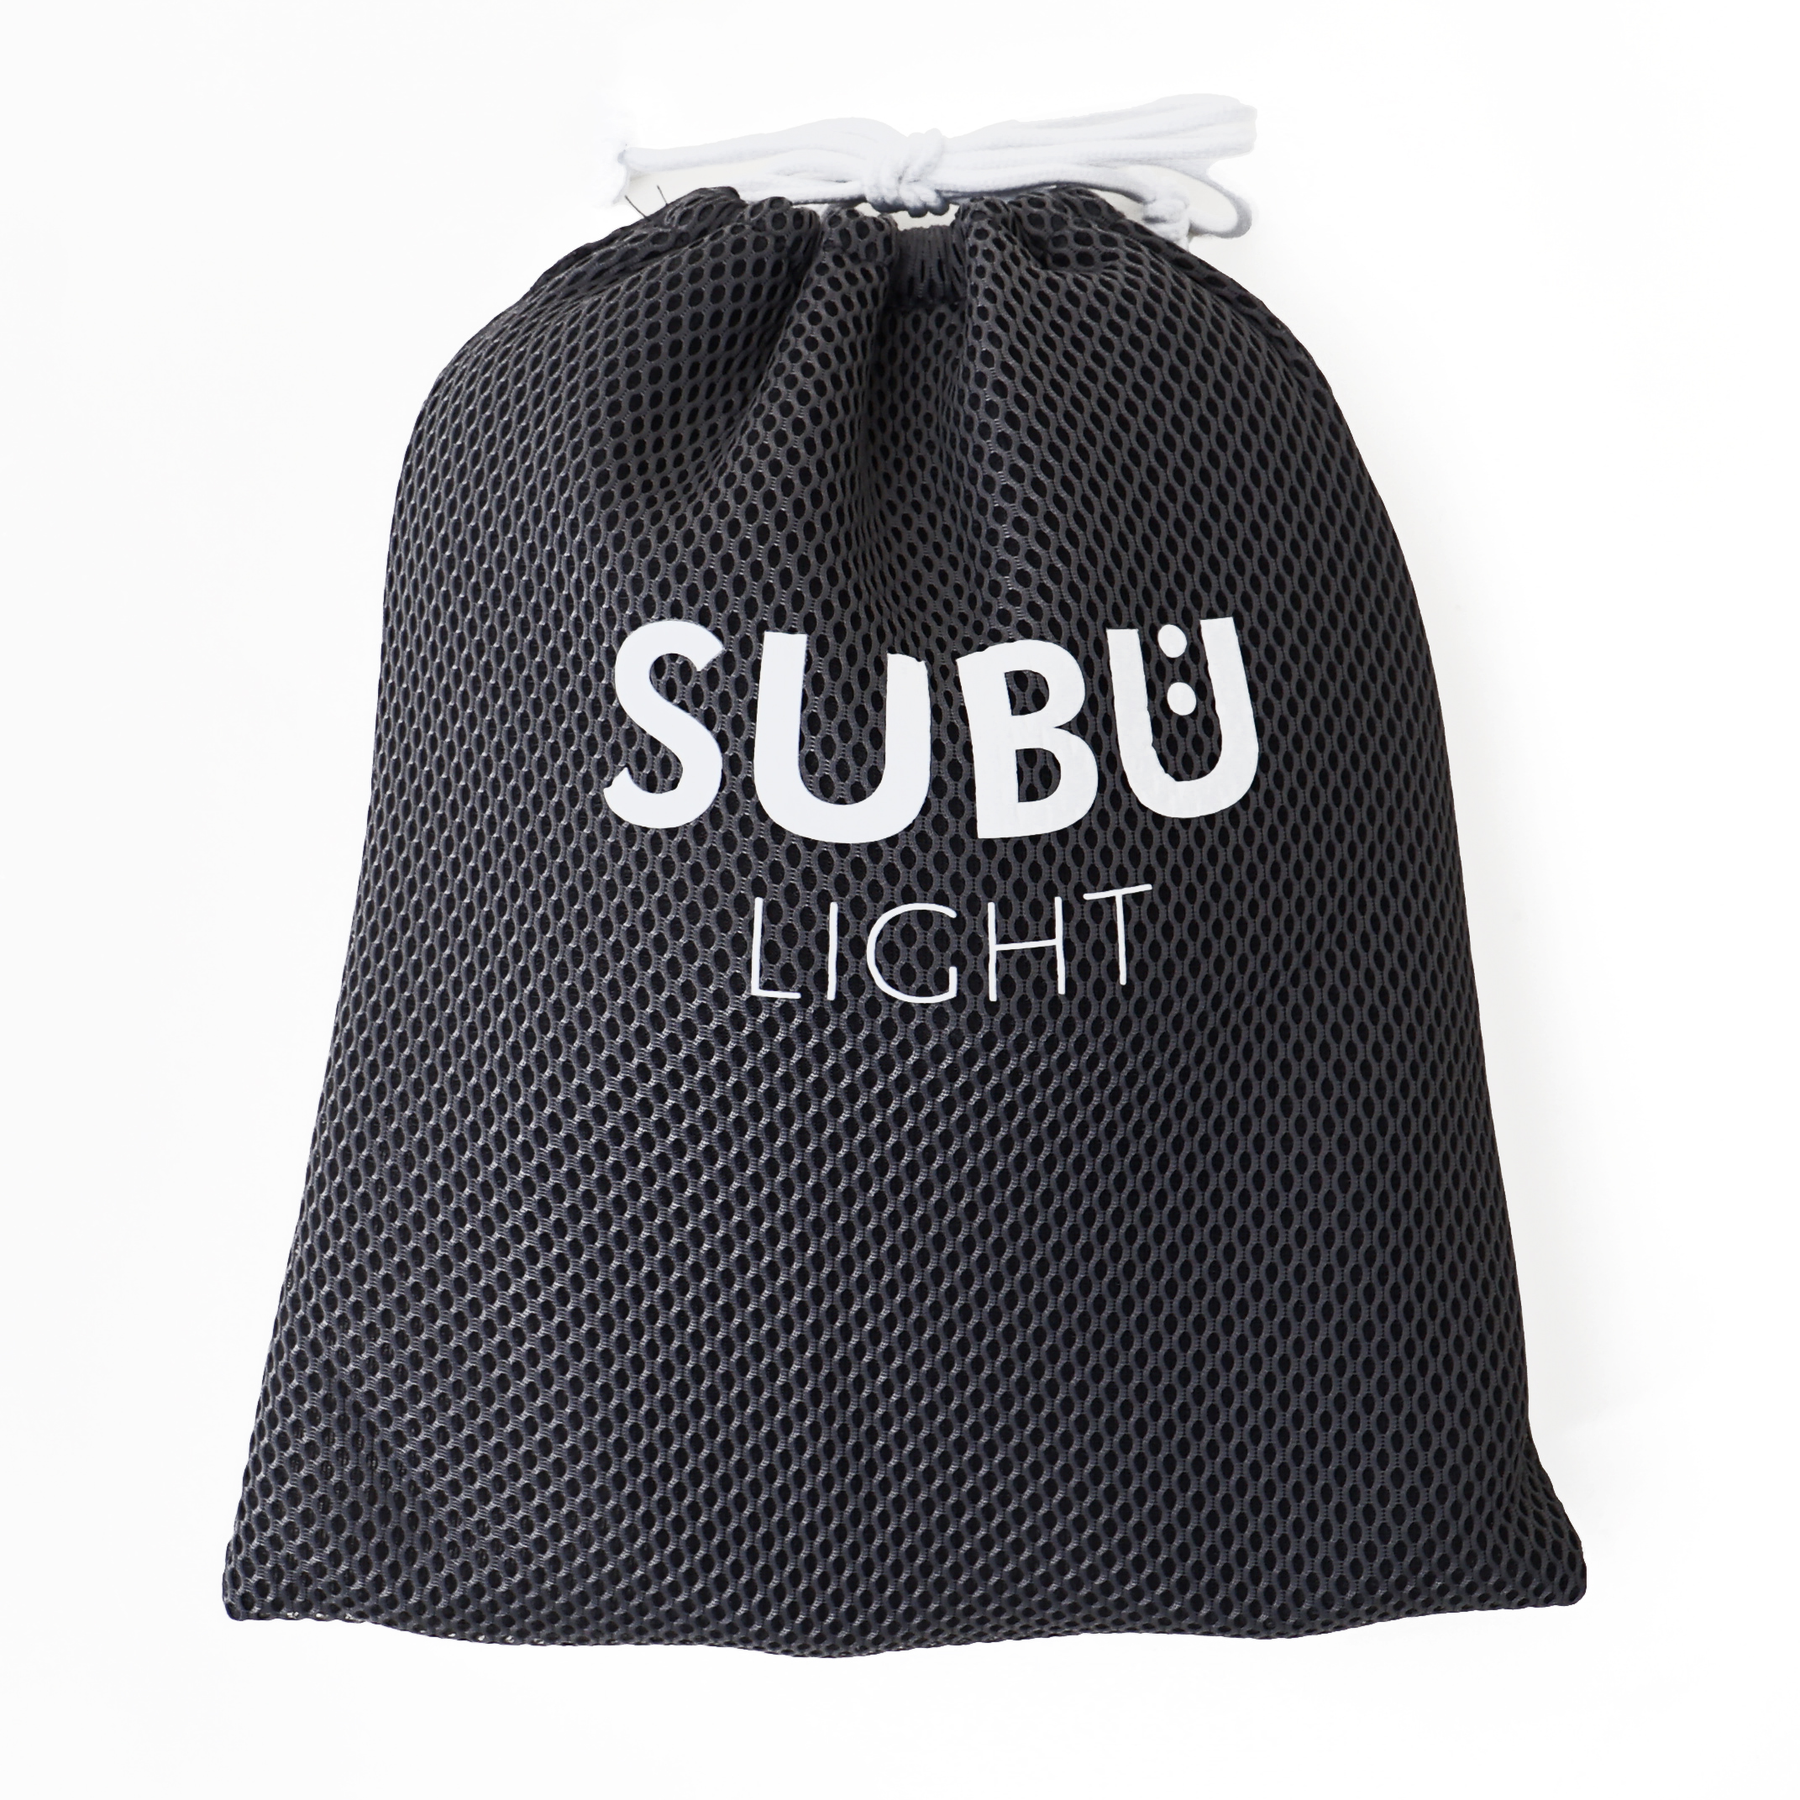 SUBU, Light Summer Slippers - Charcoal Black, 1